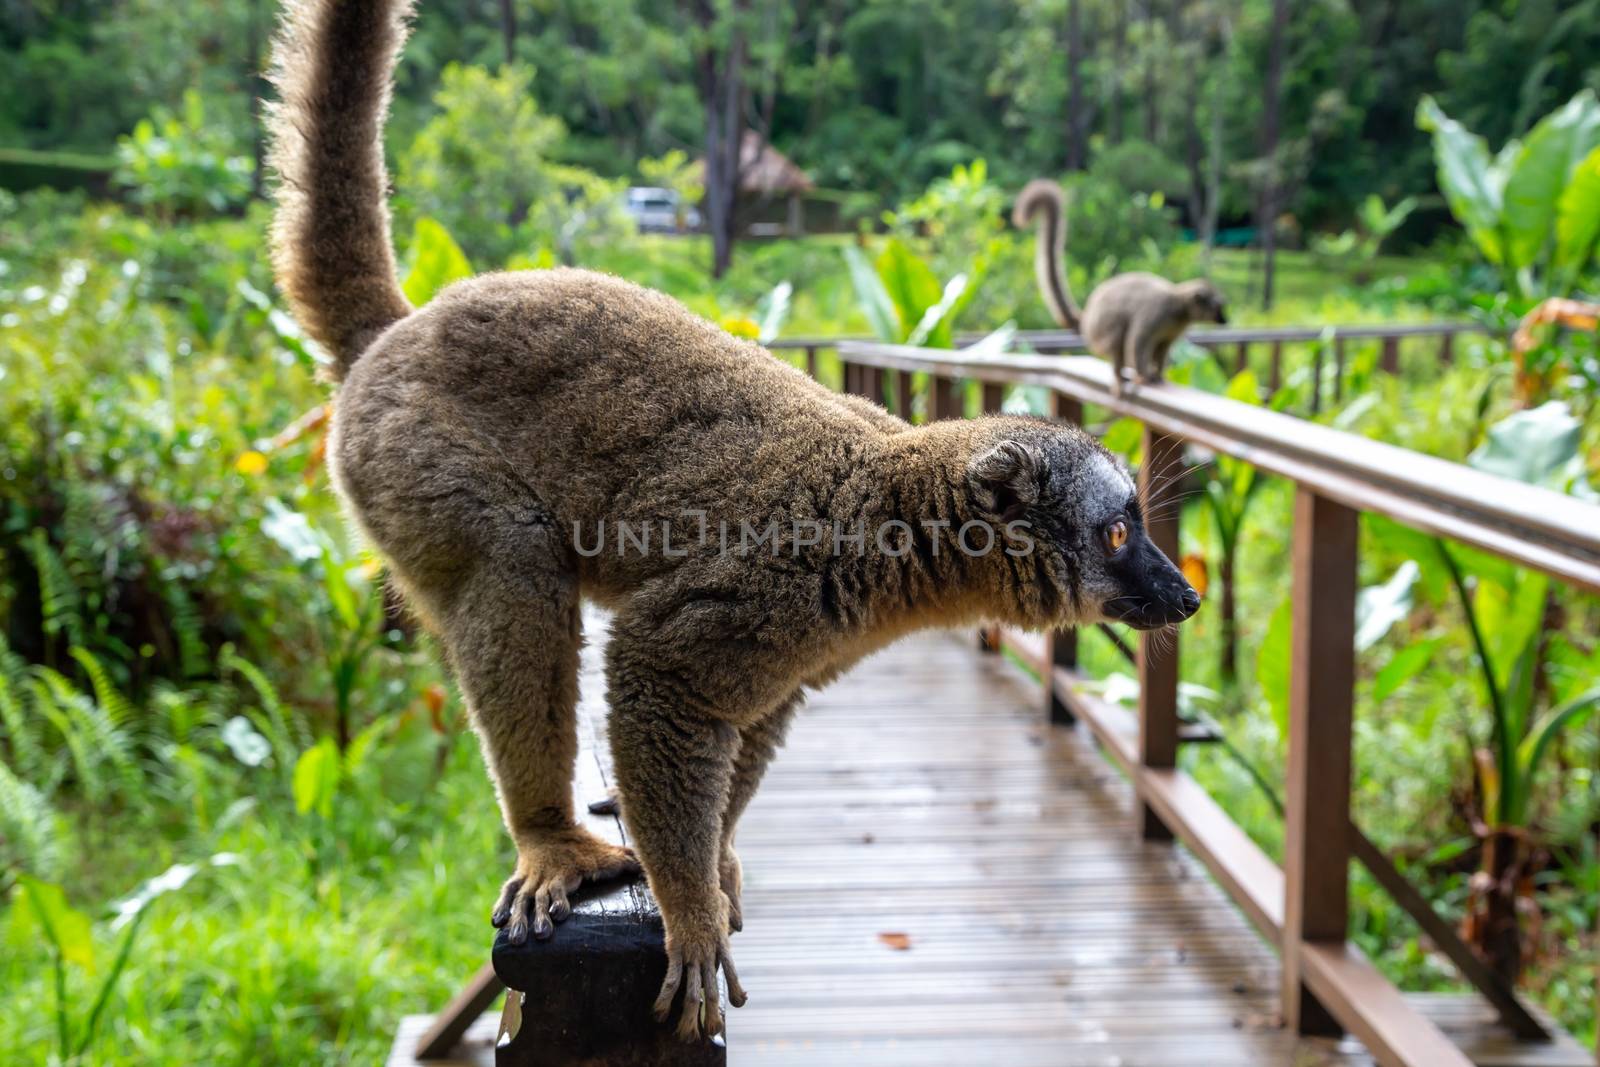 The lemur runs on a handrail from a wooden bridge